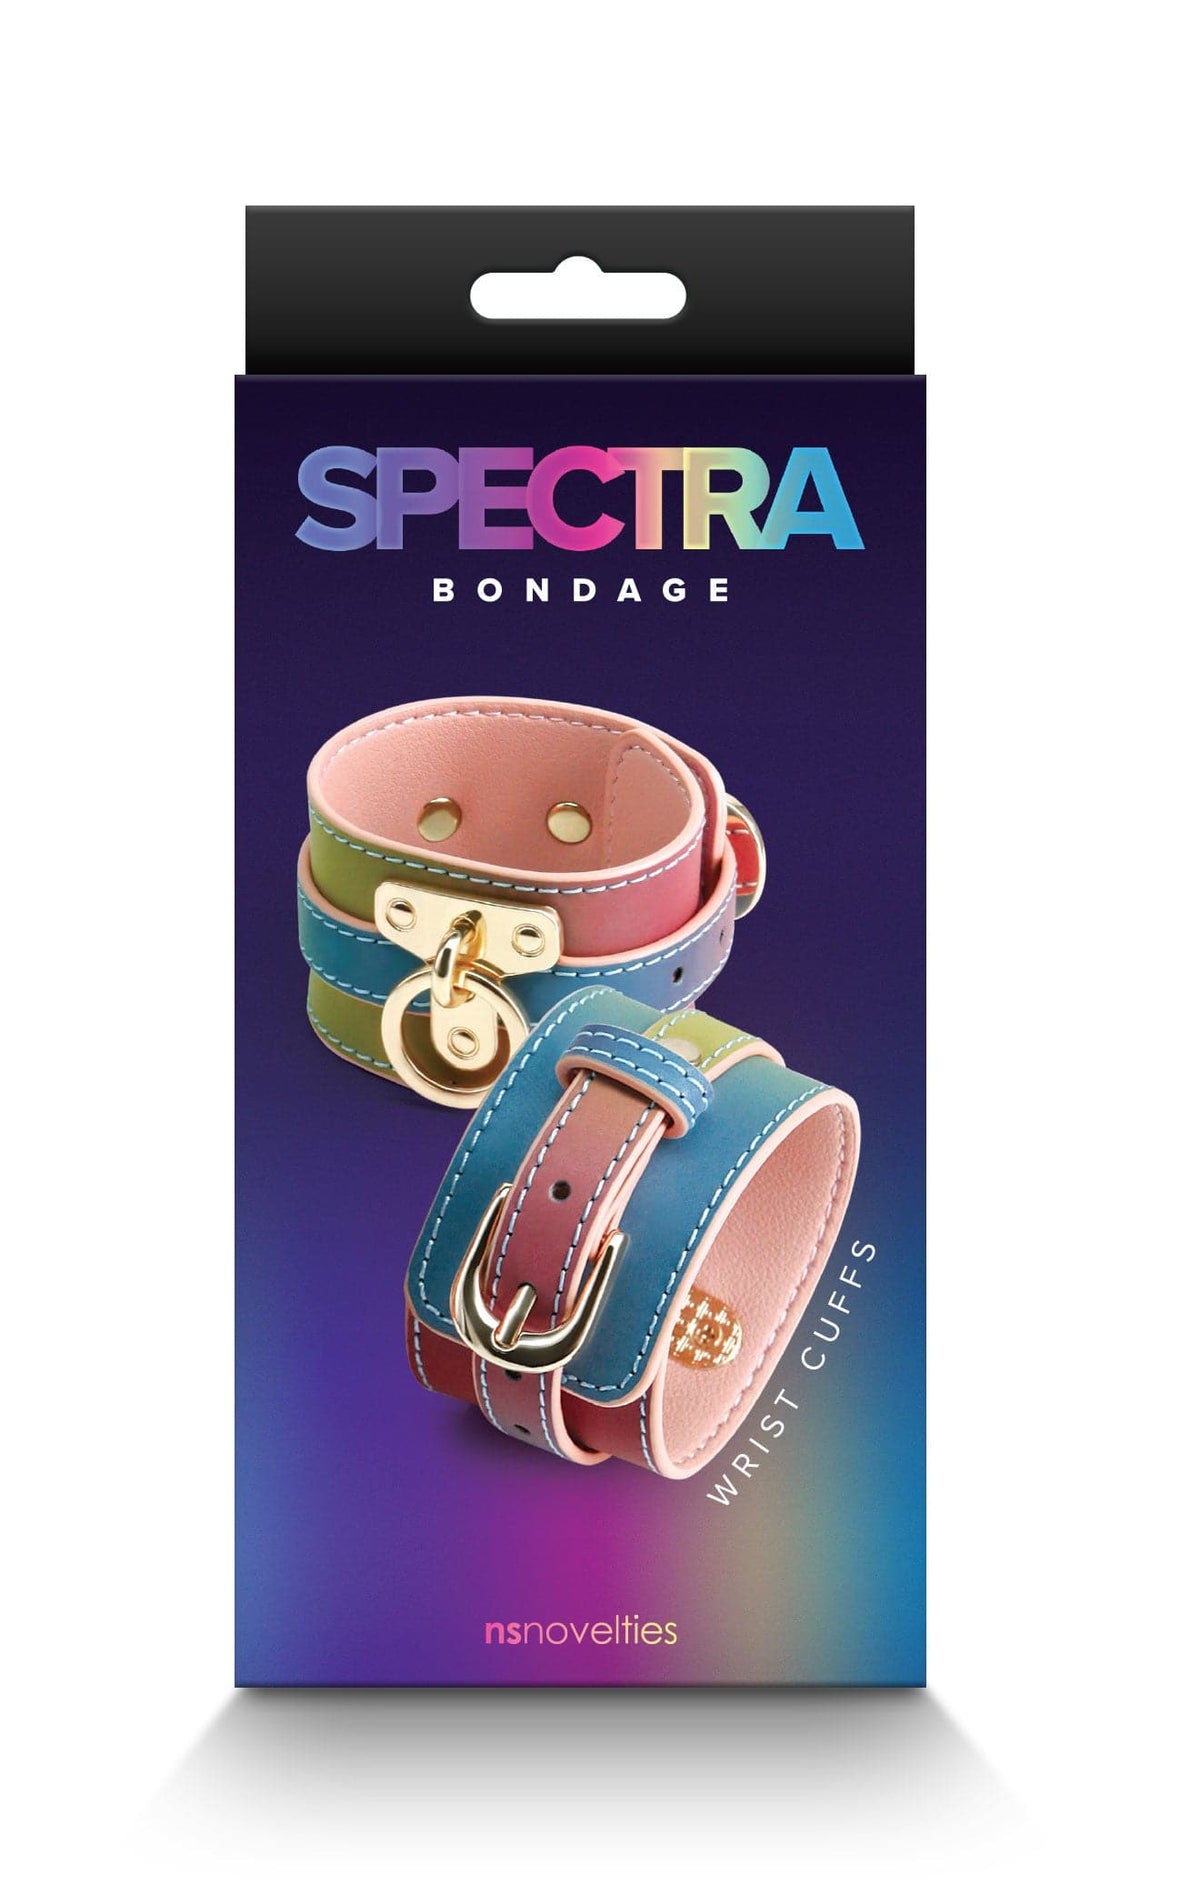 spectra bondage wrist cuff rainbow